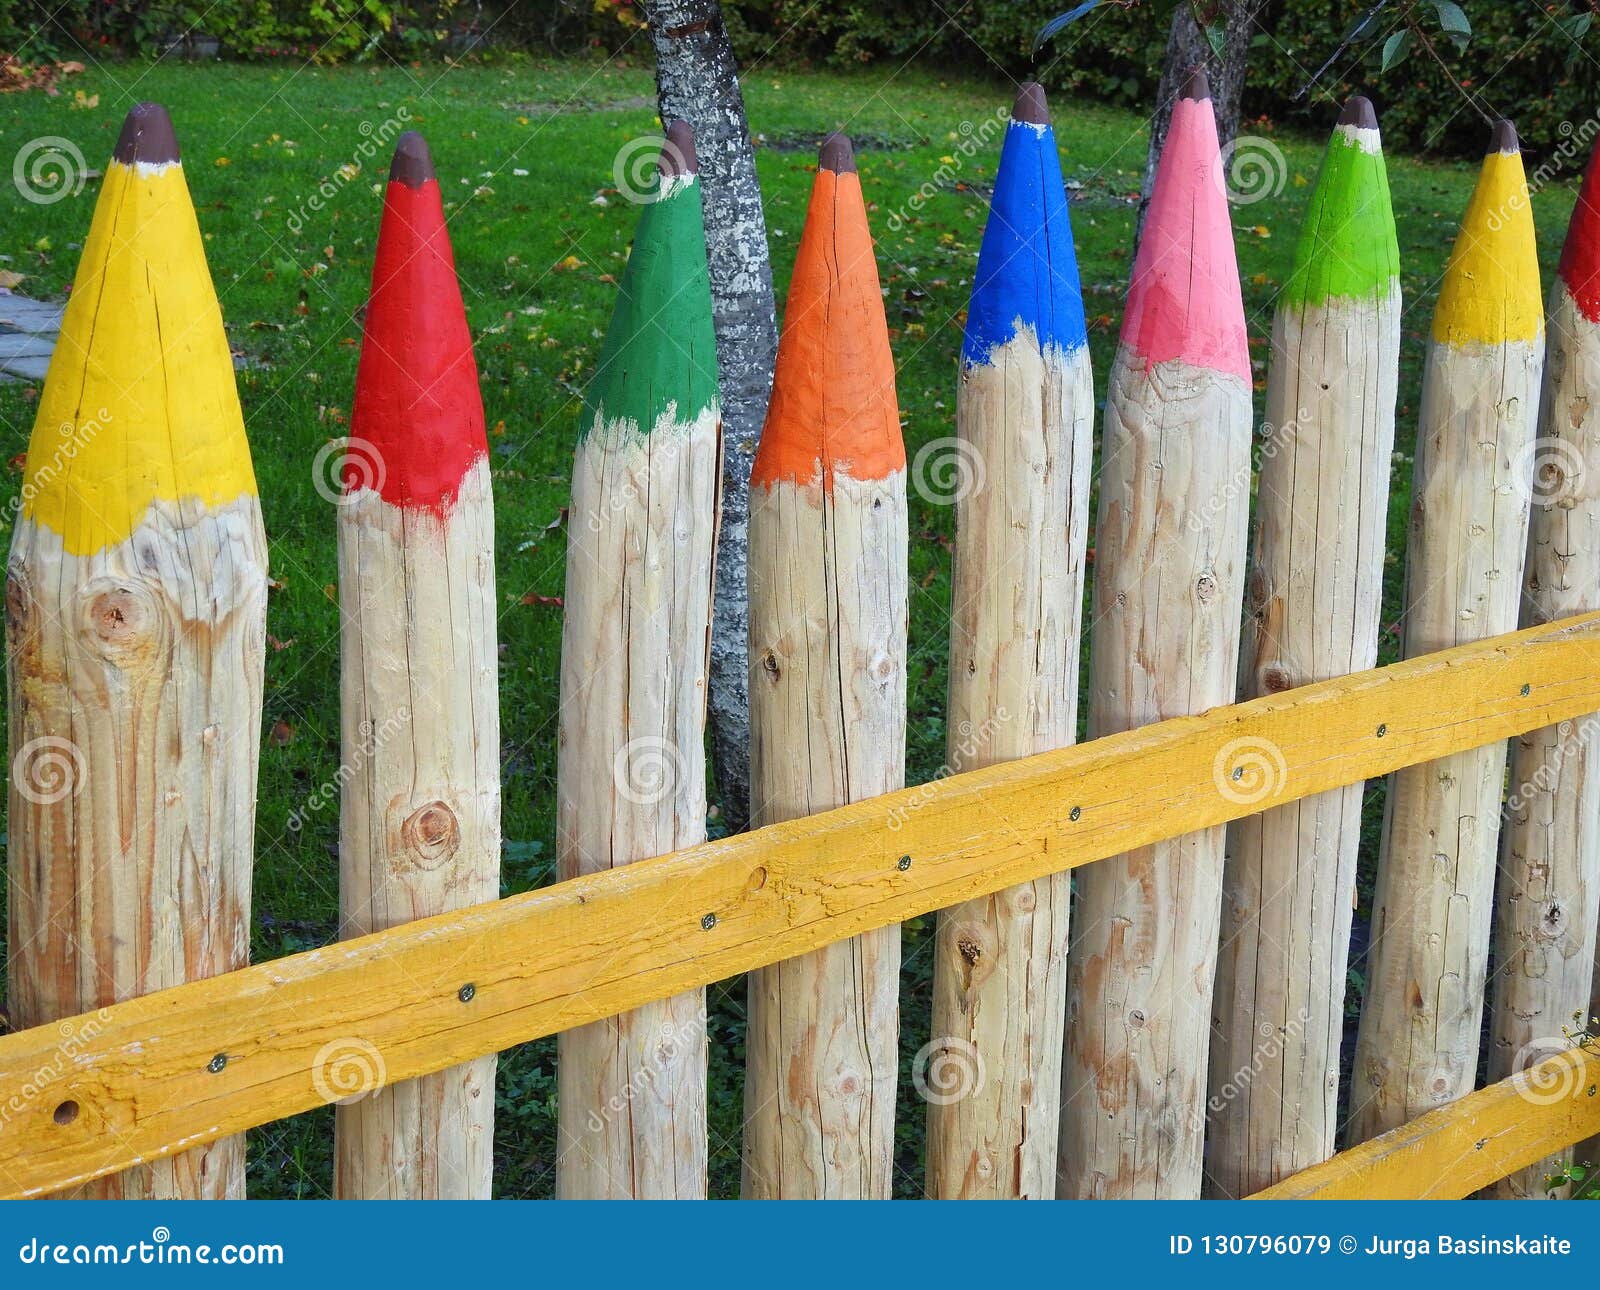 Lithuania Pencil / Handmade Big Wooden Pencils - Fence ...